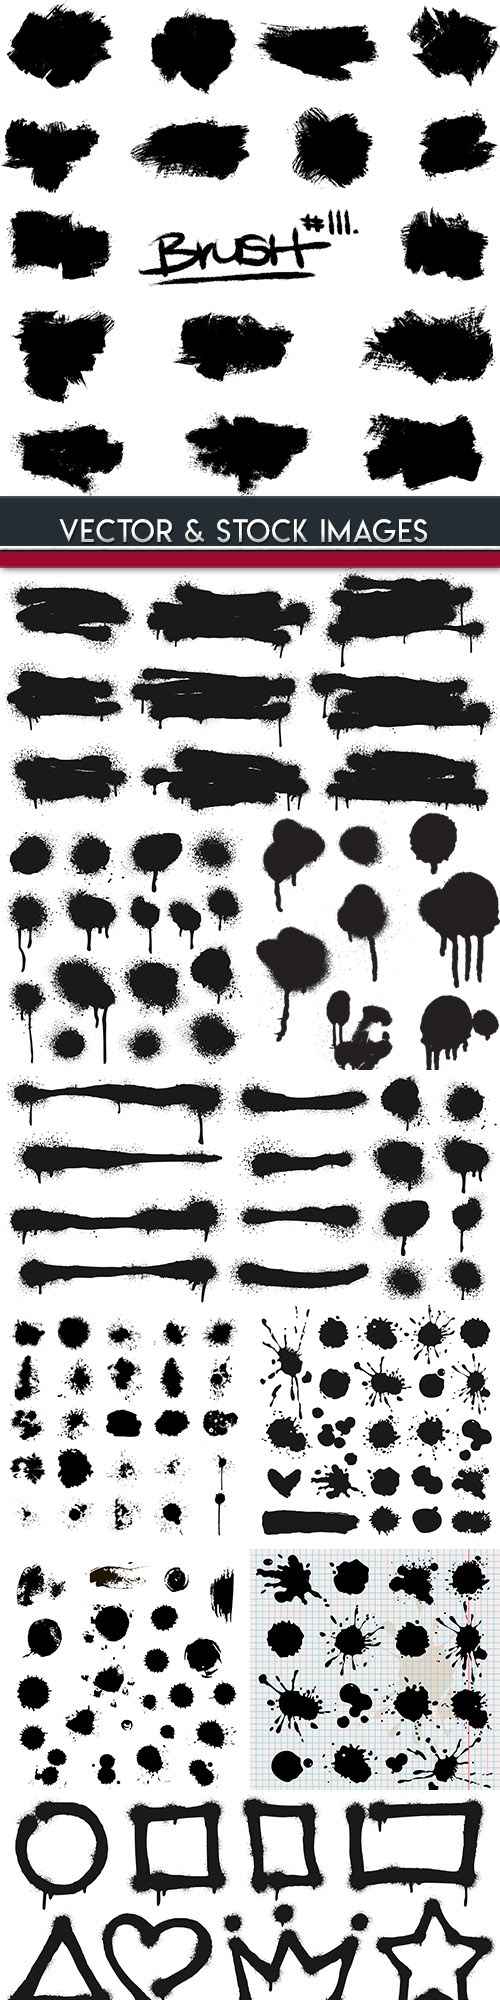 Grunge black ink and brush creative illustration 5 